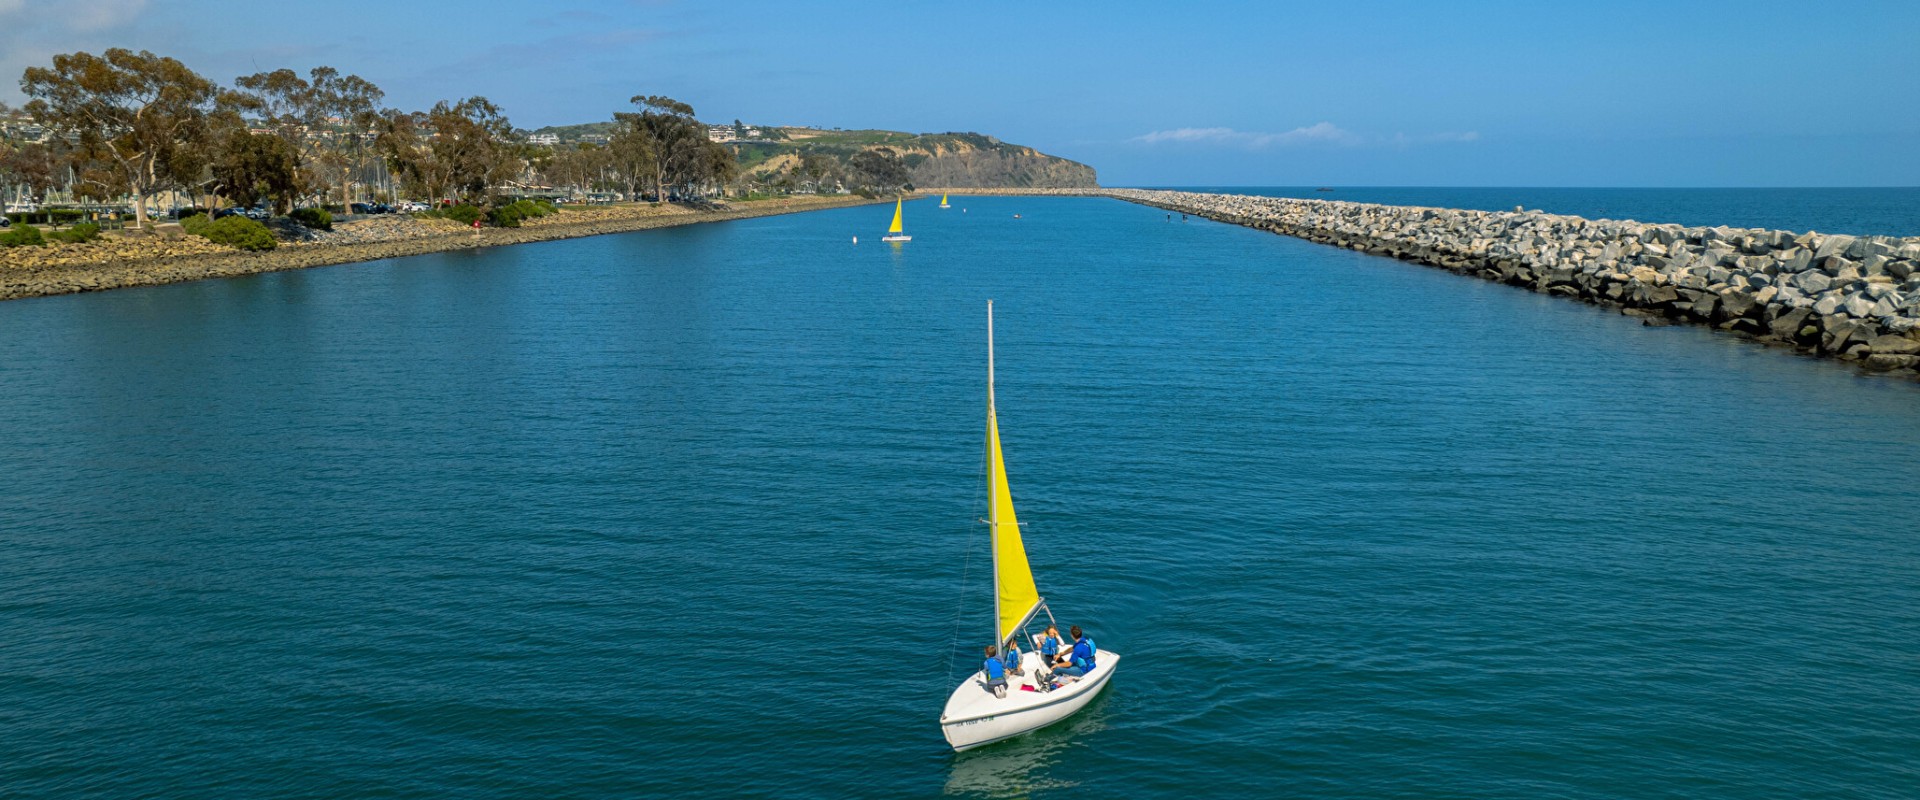 Explore Upcoming Sailing Classes in Southern California